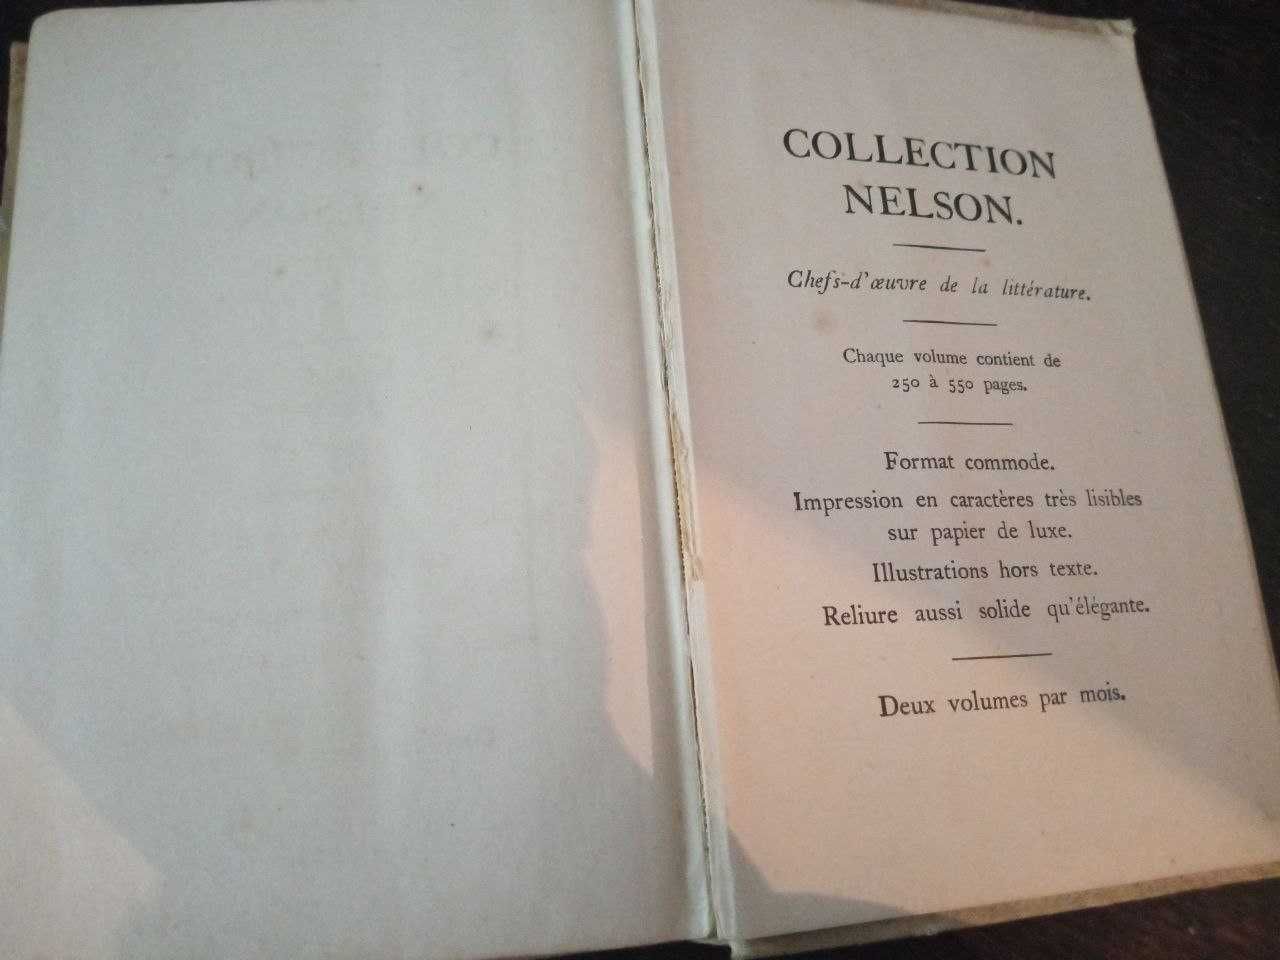 Французская книга Эмиль Нолли "Hien le Maboul"  1914 г.